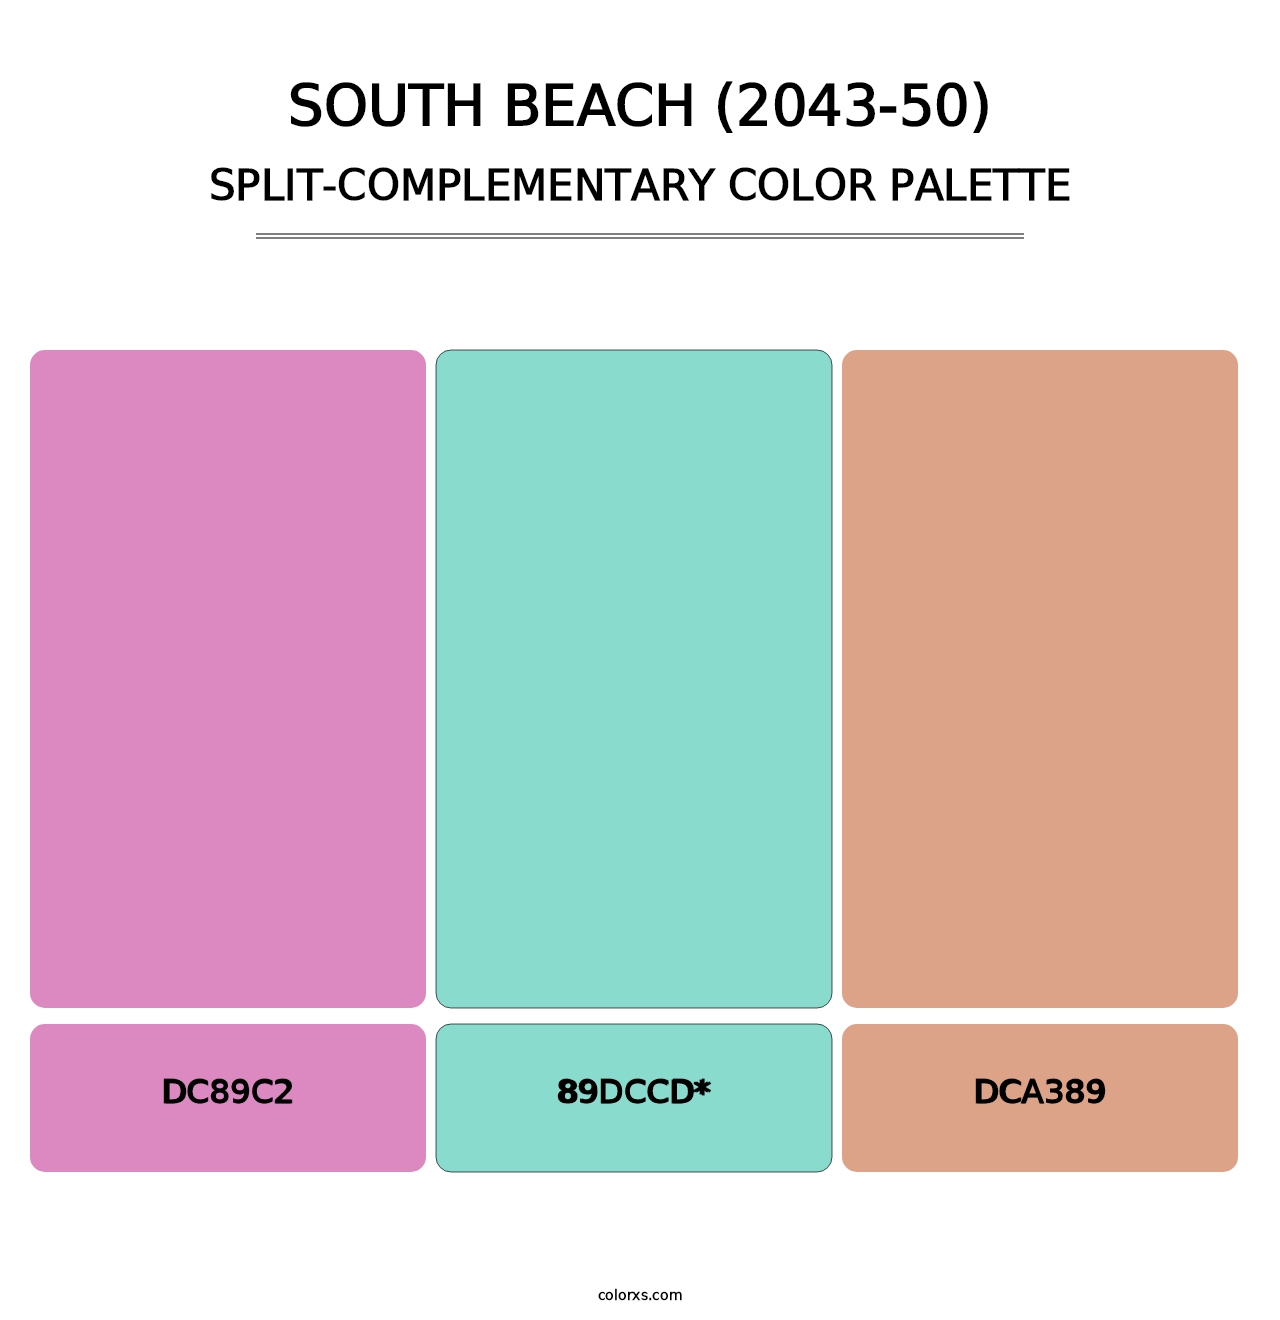 South Beach (2043-50) - Split-Complementary Color Palette